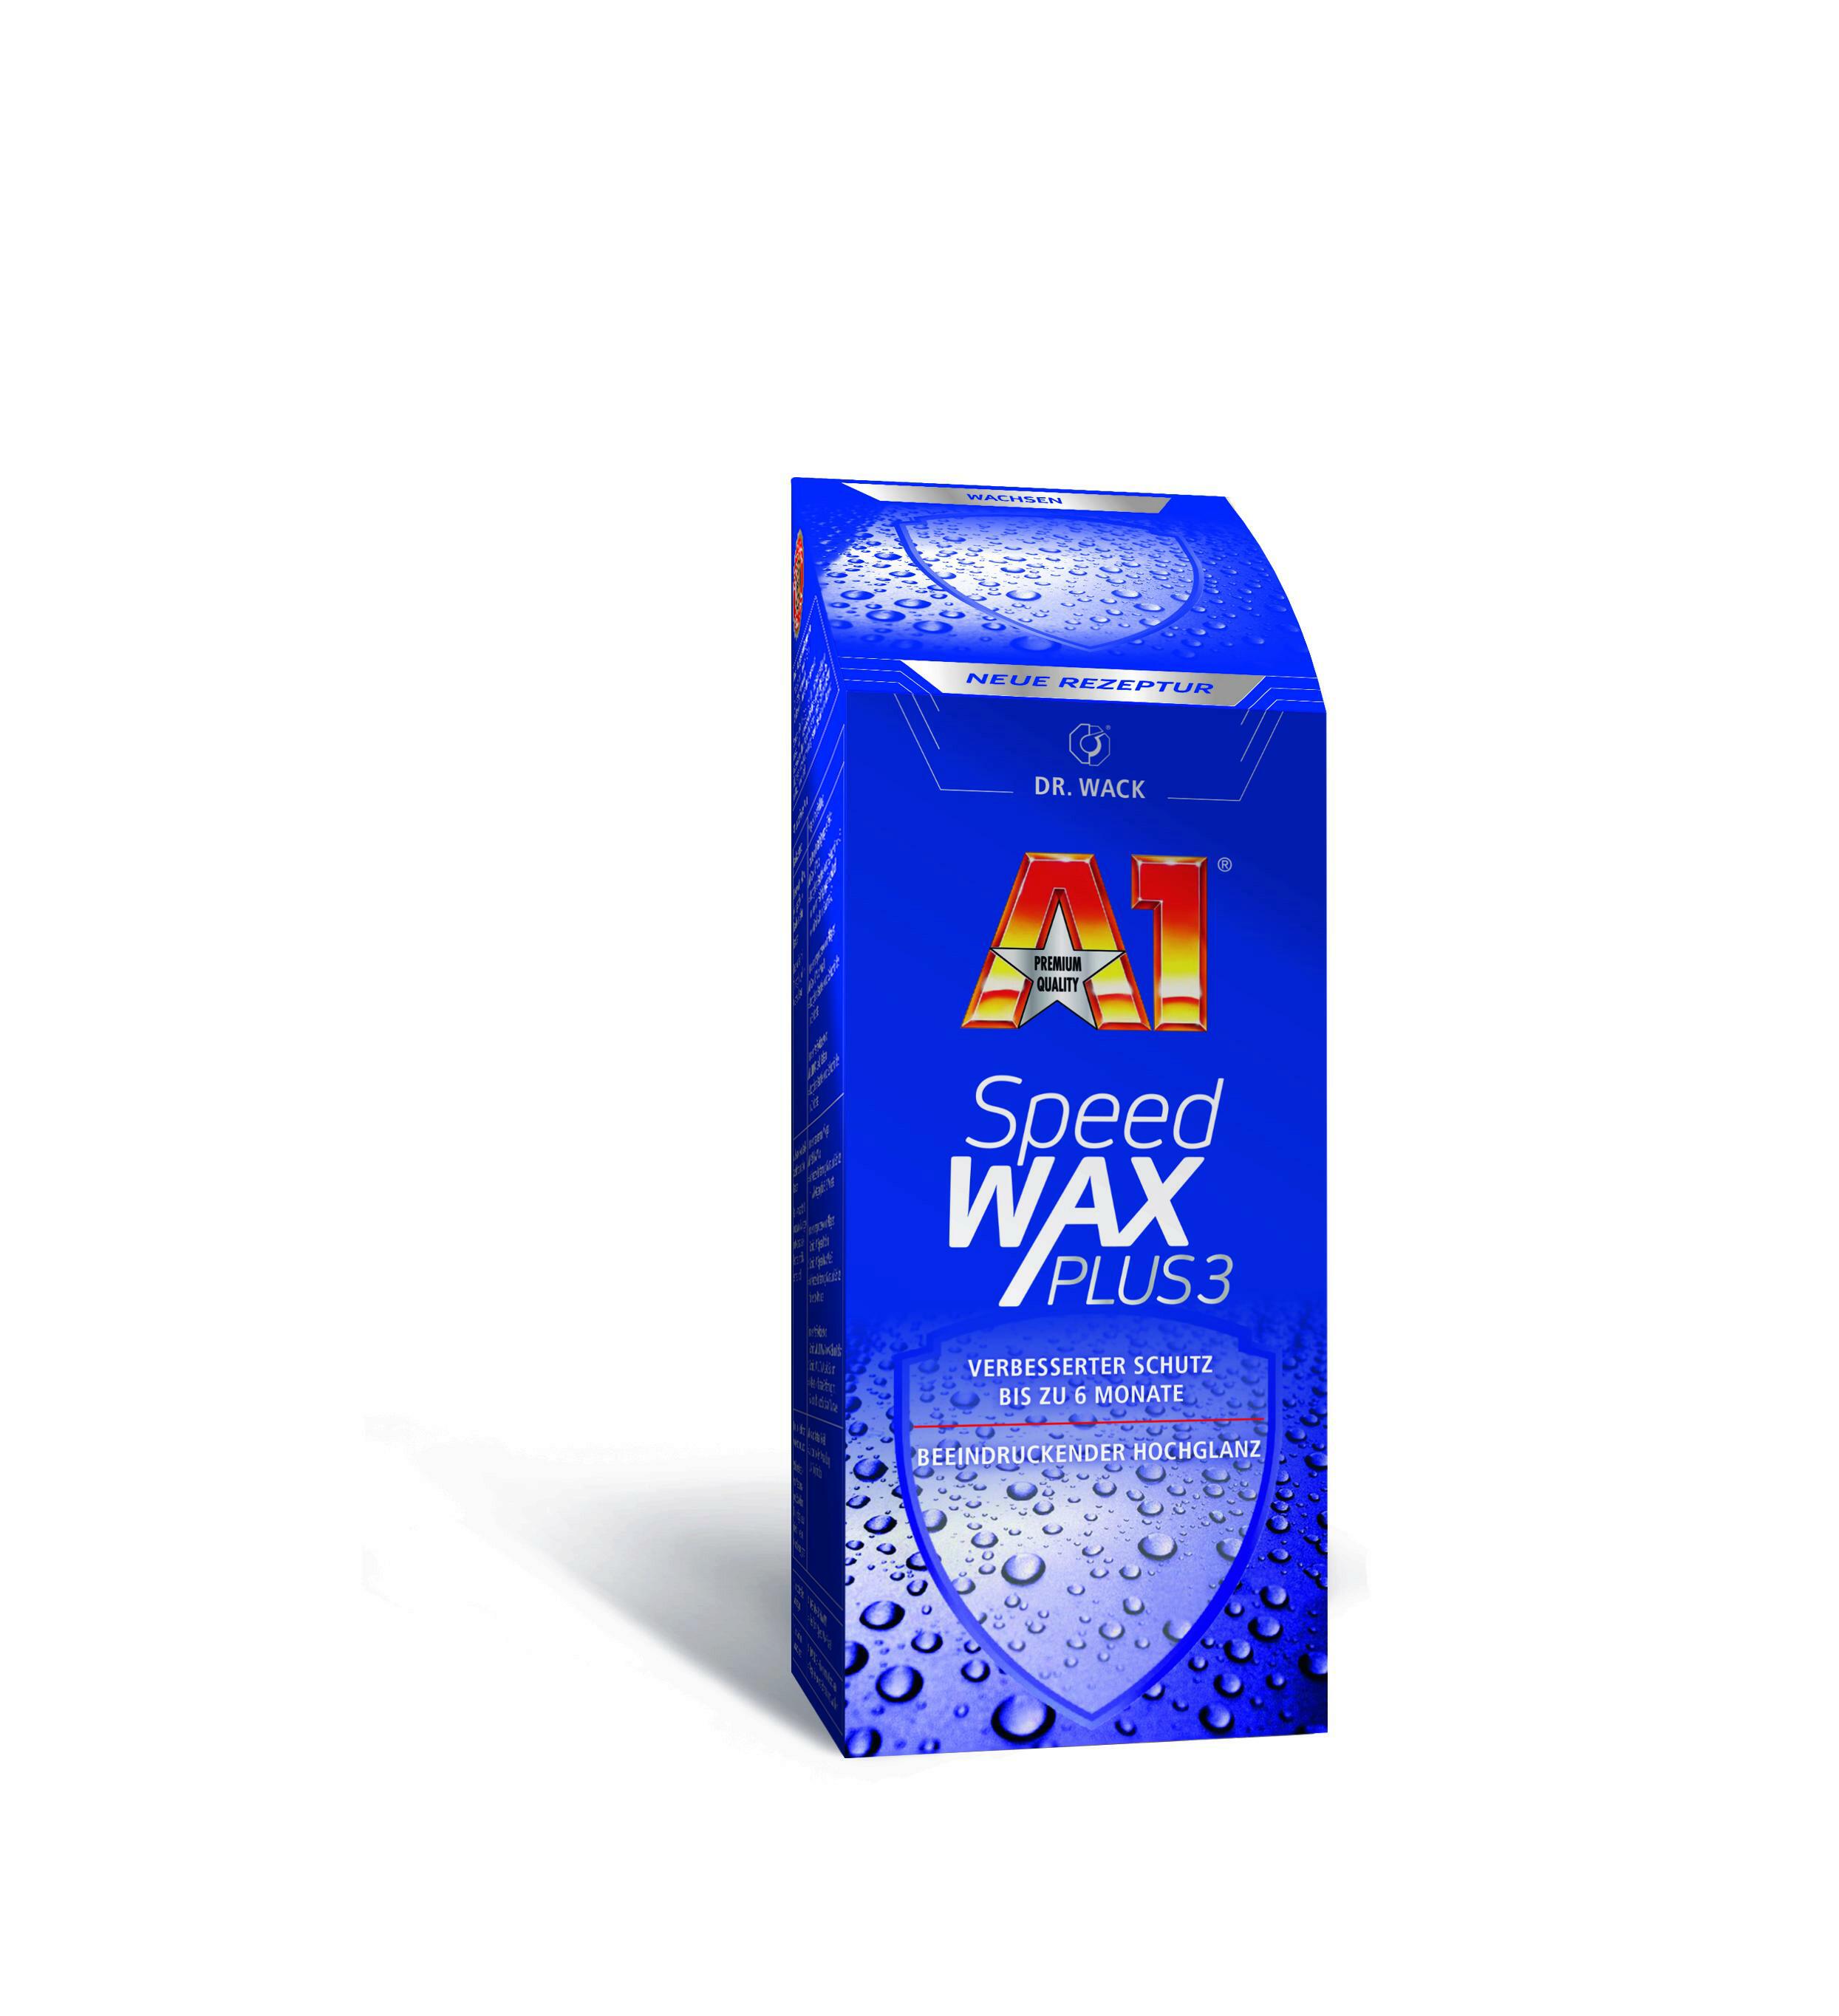 DR. WACK A1 Speed Wax Plus 3 Wachs Lack Pflege Versiegelung